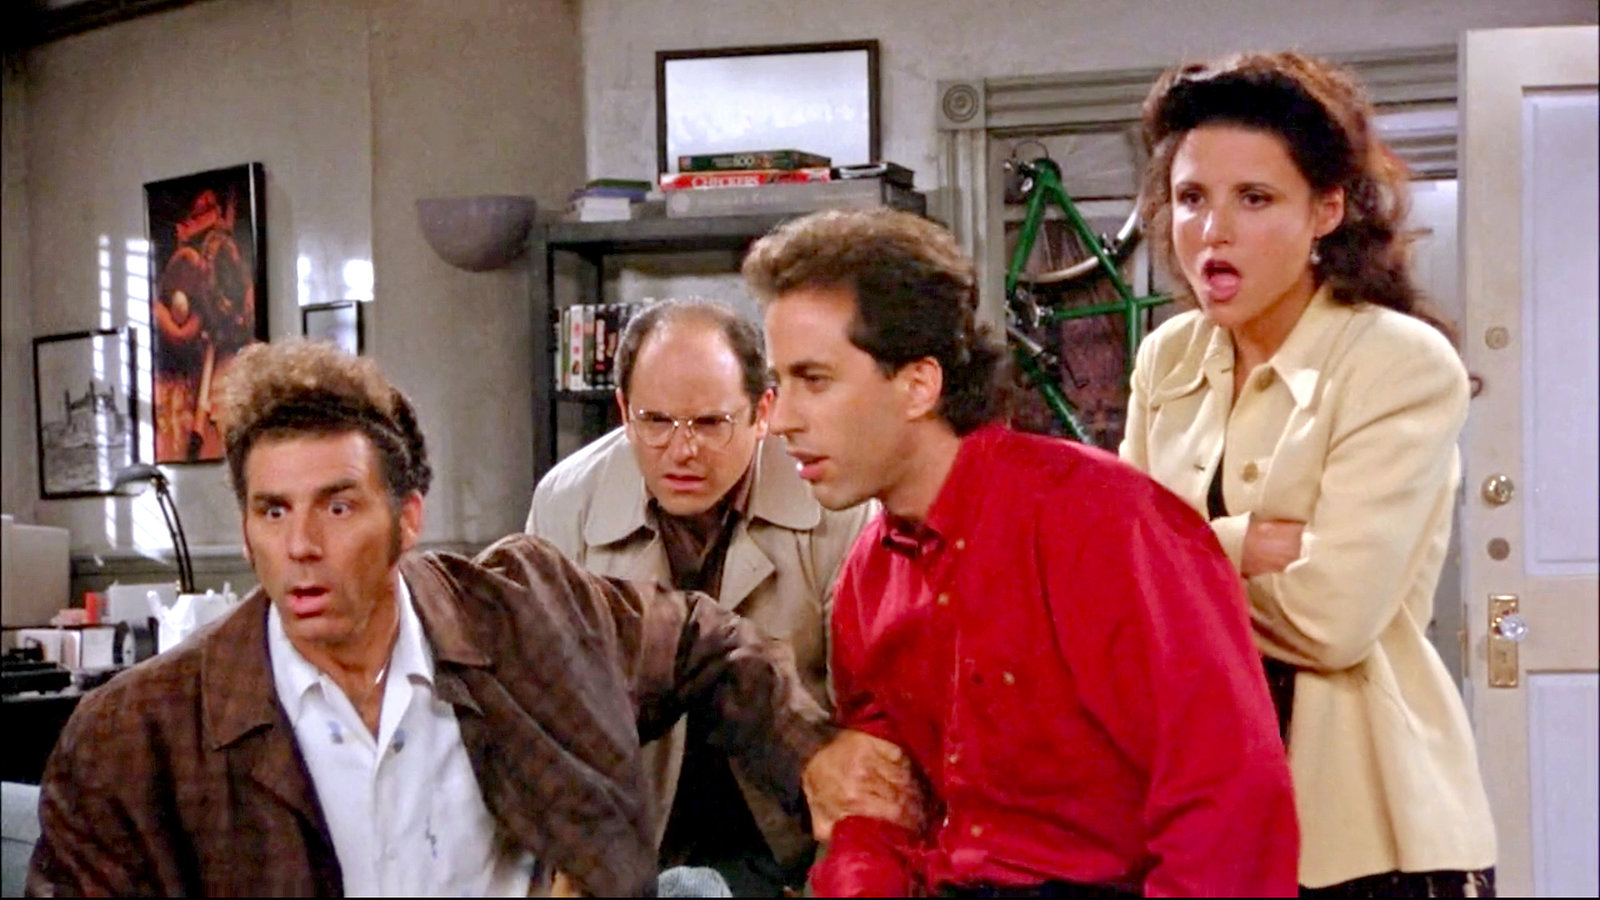 Where to Stream Seinfeld?